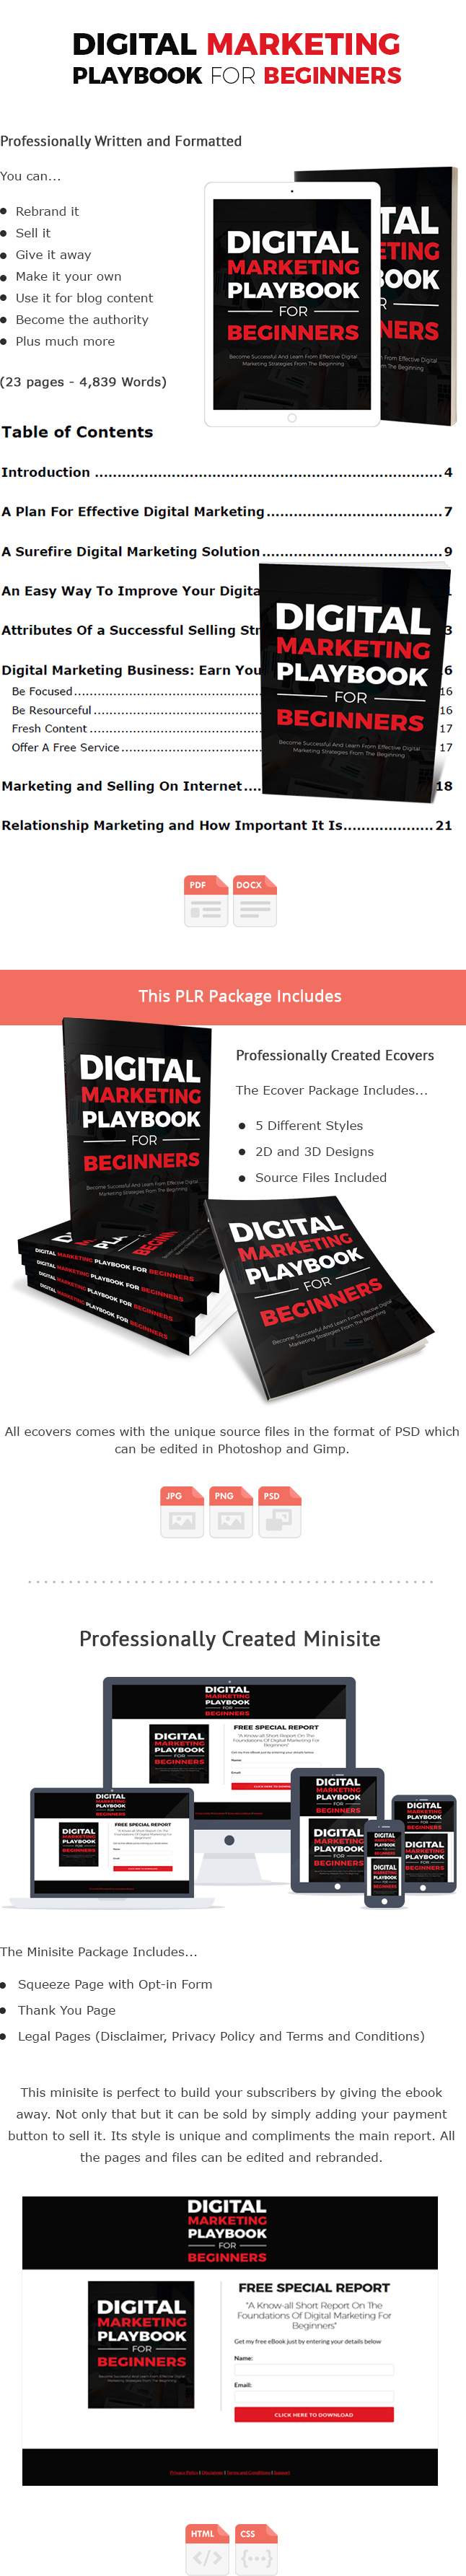 Digital Marketing Playbook For Beginner